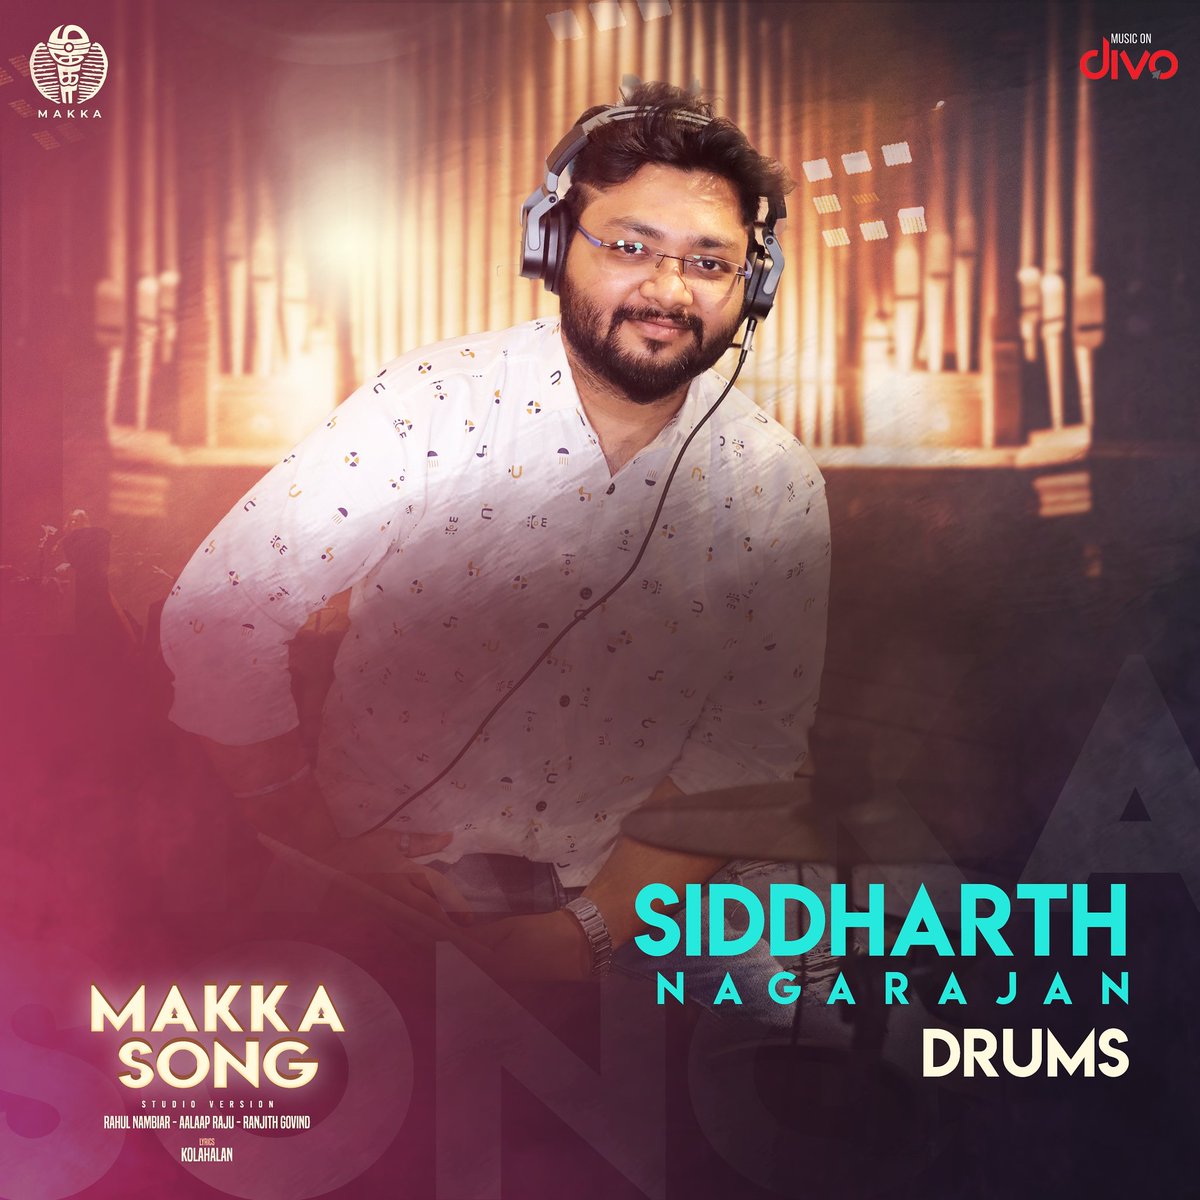 Presenting Makka's makkal  !
@drumssiddharth  a spectacular drummer & musician 🥁

'Makka song - Studio Version' releasing on June 21st ✨

#makkaband #ranjithgovind #rahulnambiar #aalaapraju #drummer #drumsiddharth #instadaily #instagood